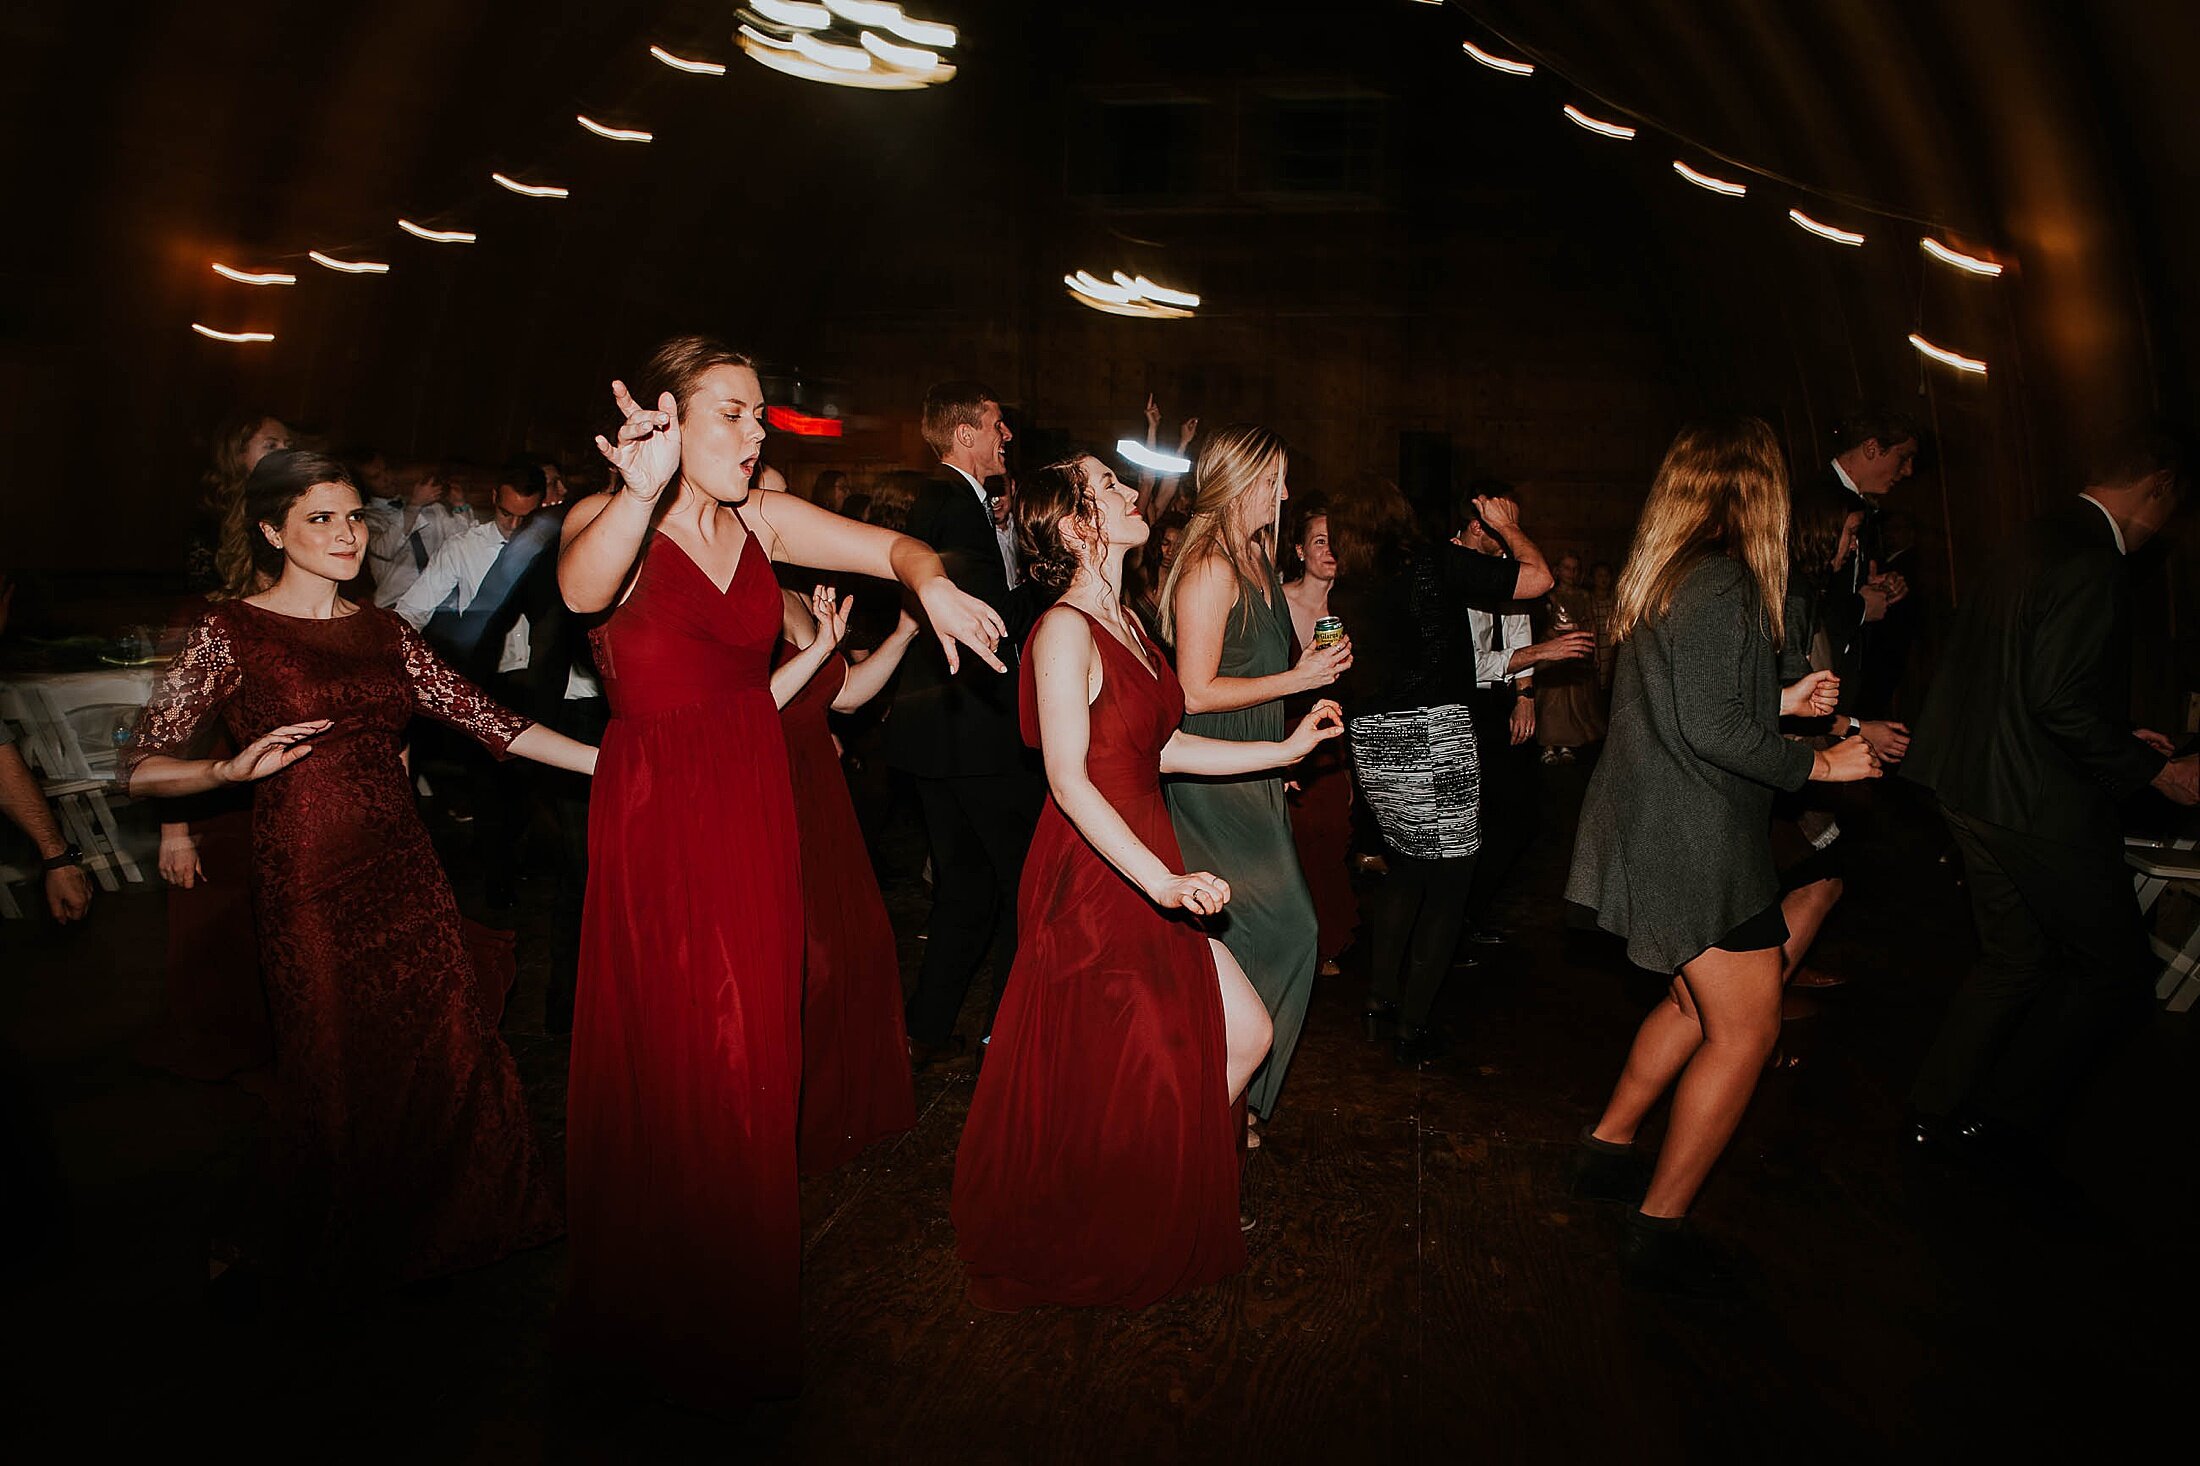 stevens point winter wedding erons event barn dance floor cupid shuffle